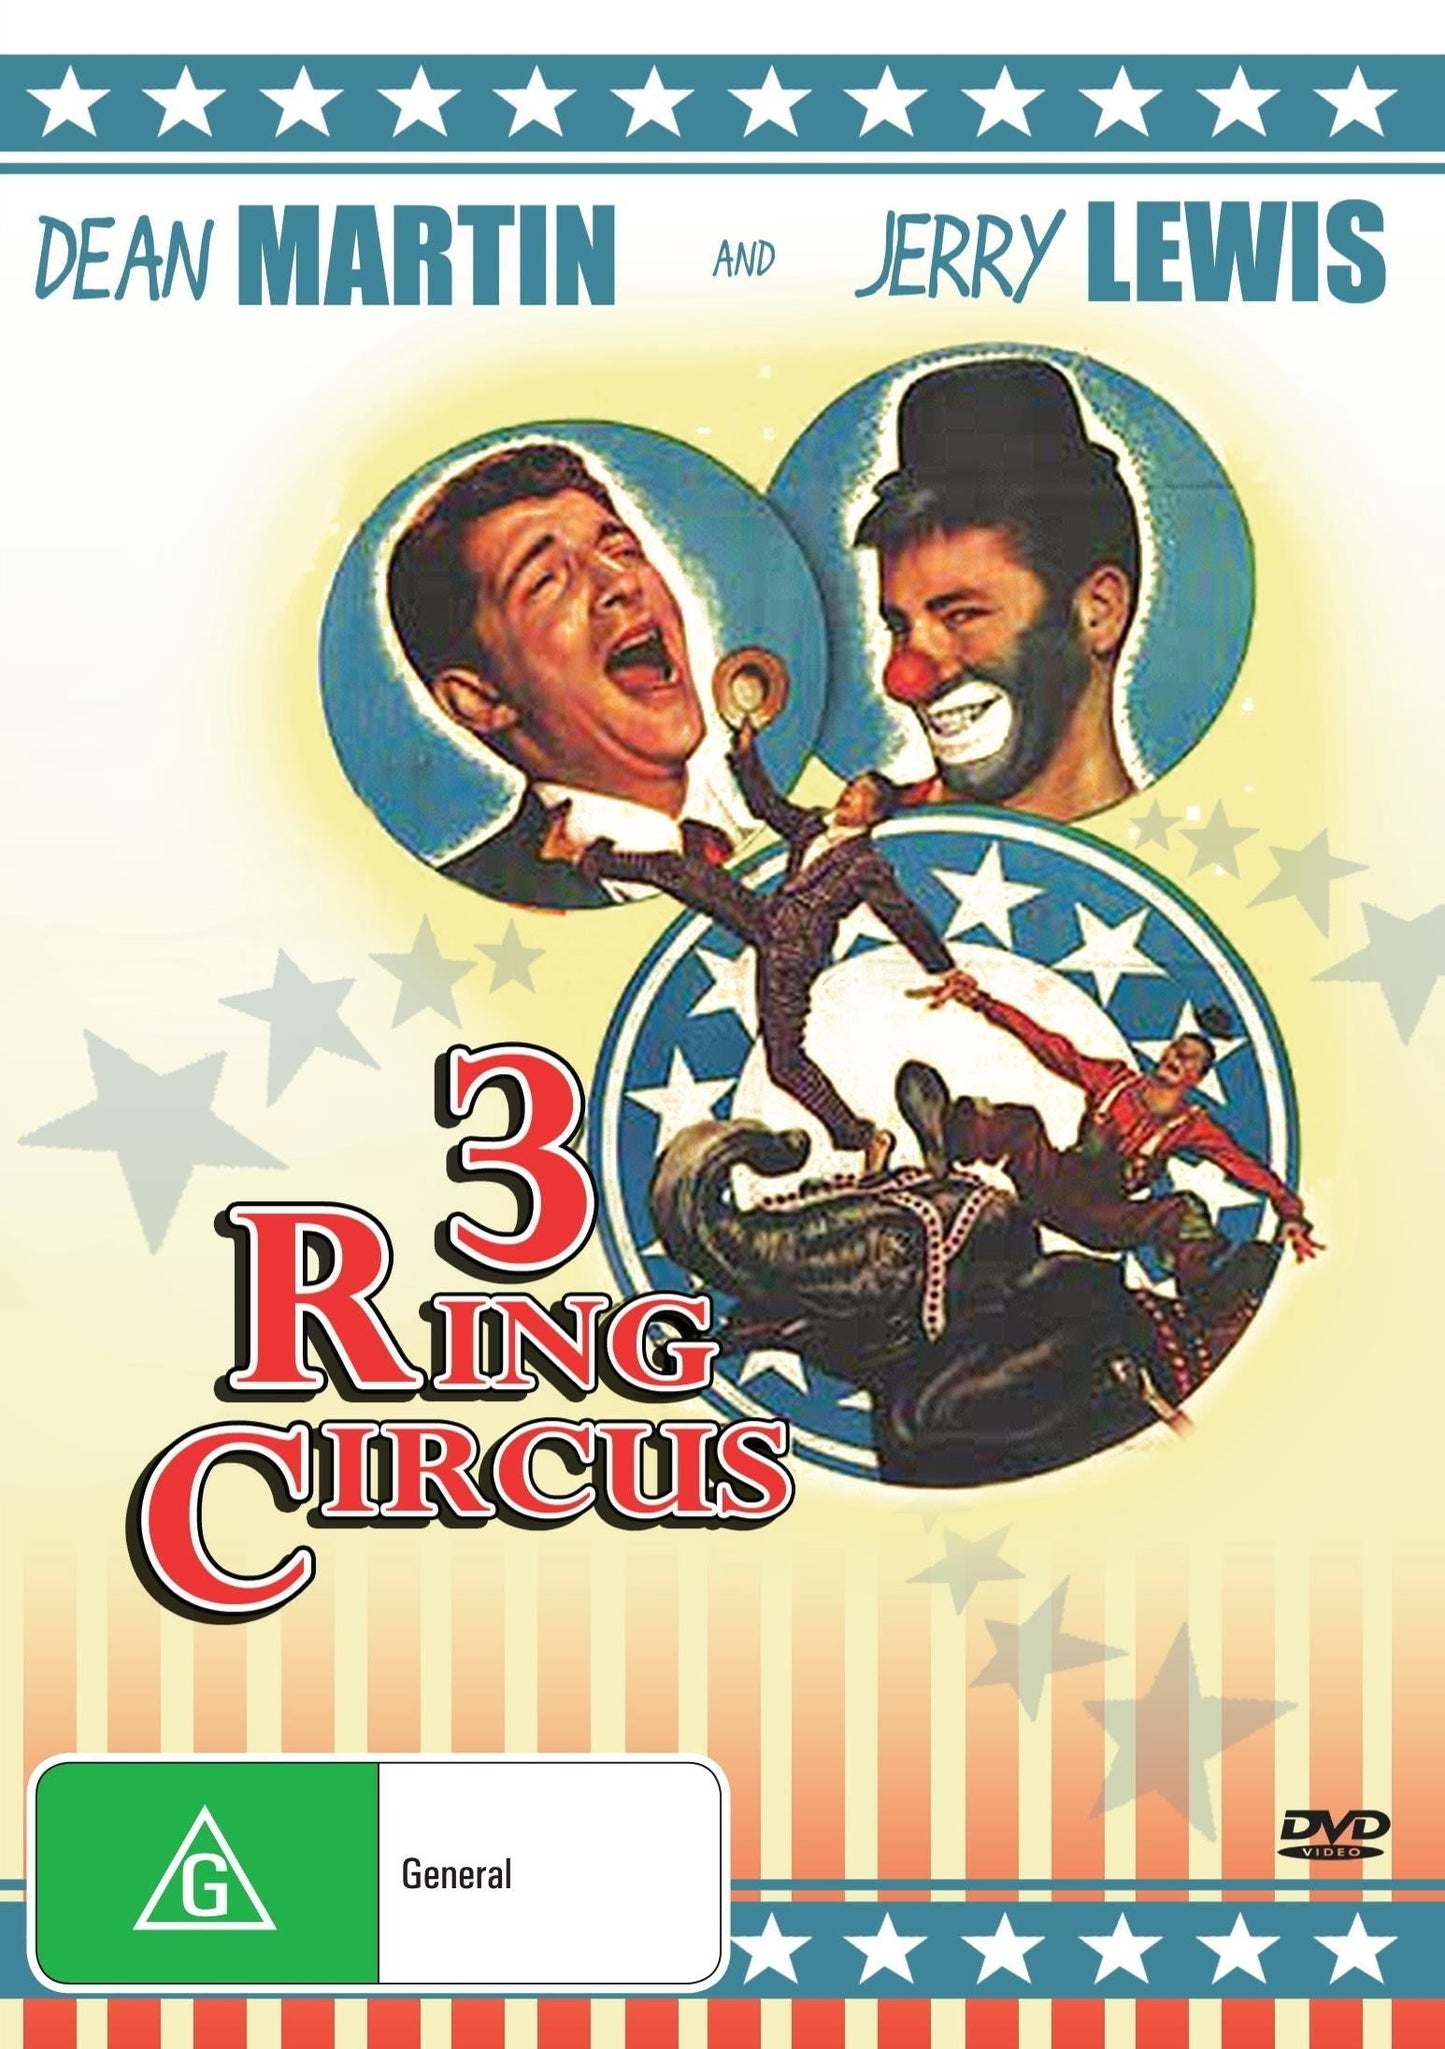 3 Ring Circus rareandcollectibledvds